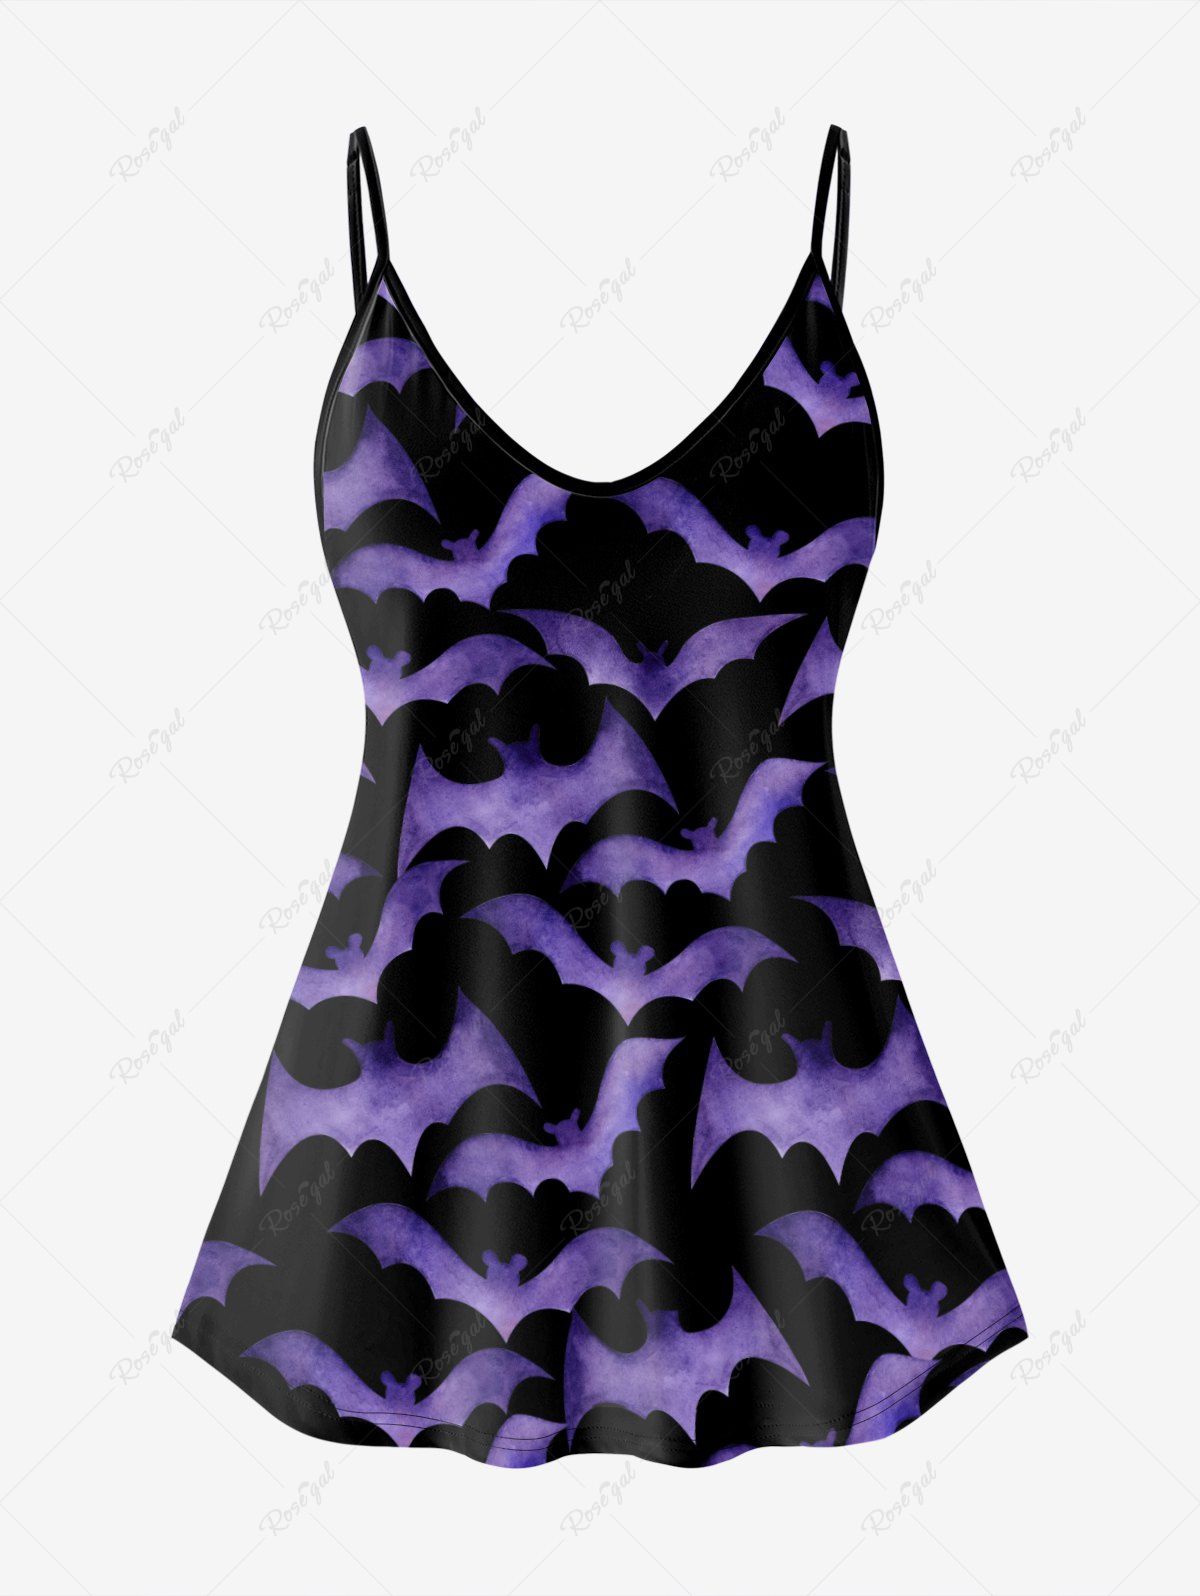 New Gothic Allover Bat Print Cami Top  